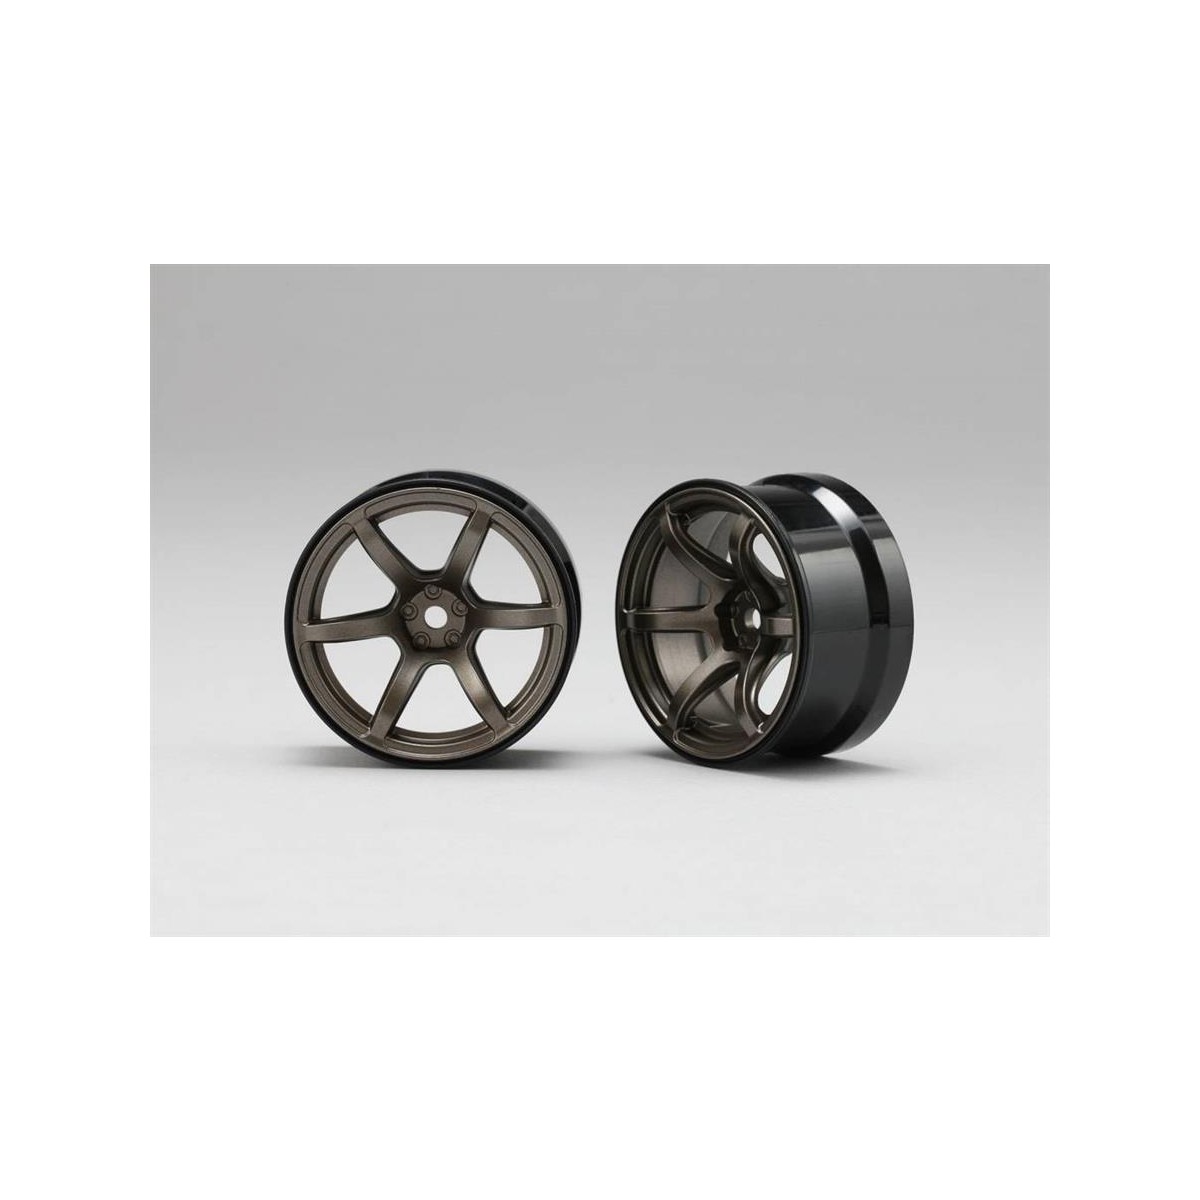 Yokomo колесные диски Yokomo Drift Volk Racing. RC Drift Wheels 2 Color 6 spokes. Yokomo led Wheel. Диски BRANEW 6-spoke. Drift wheels